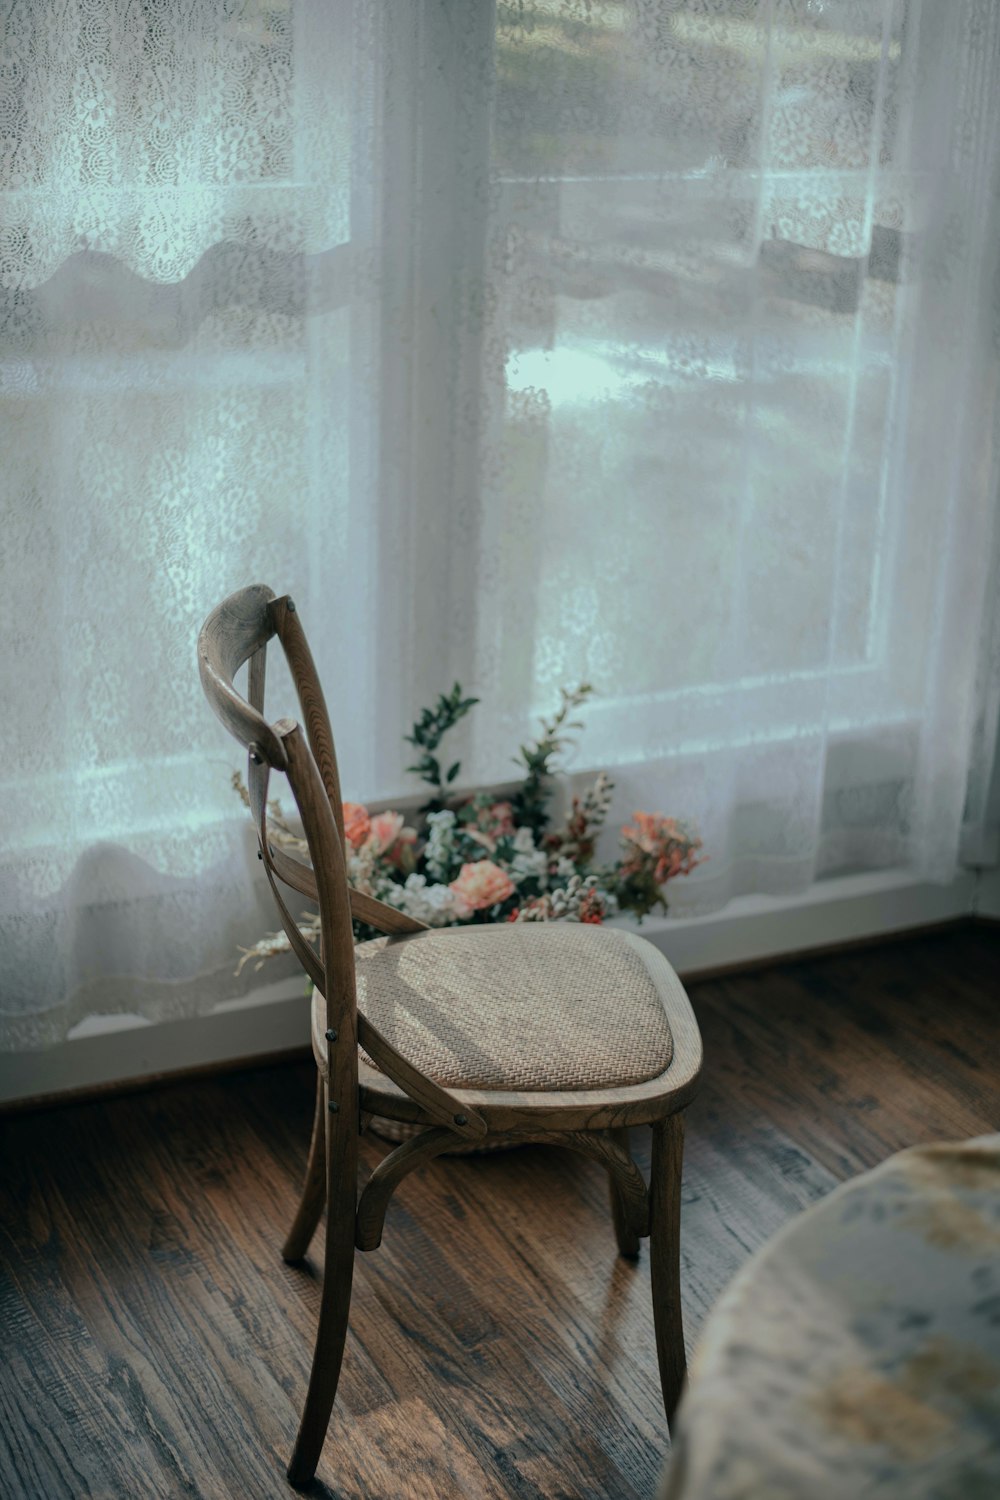 brown wooden chair near white window curtain